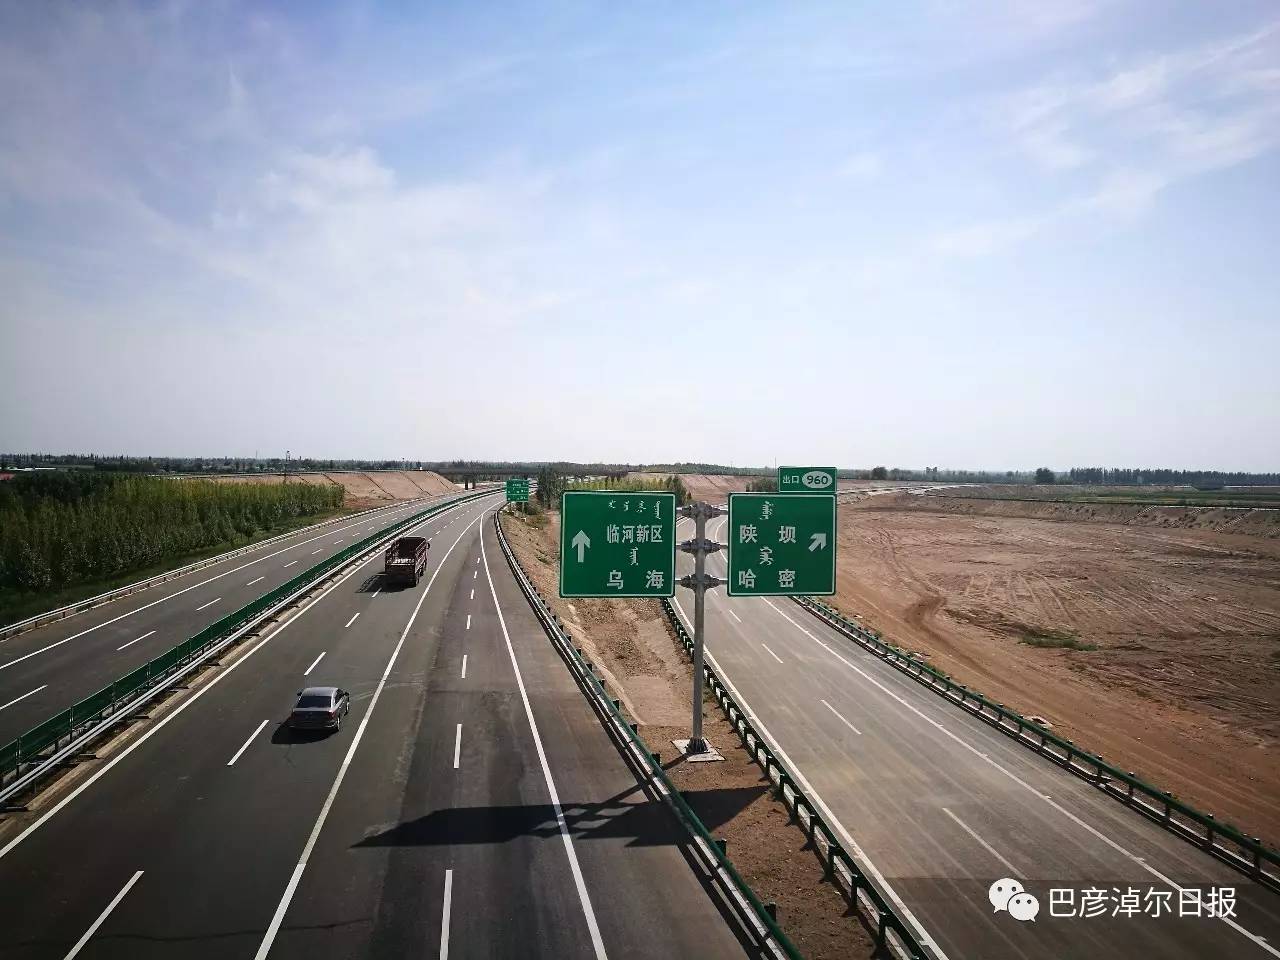 G7京新高速高清图片下载-正版图片500706635-摄图网